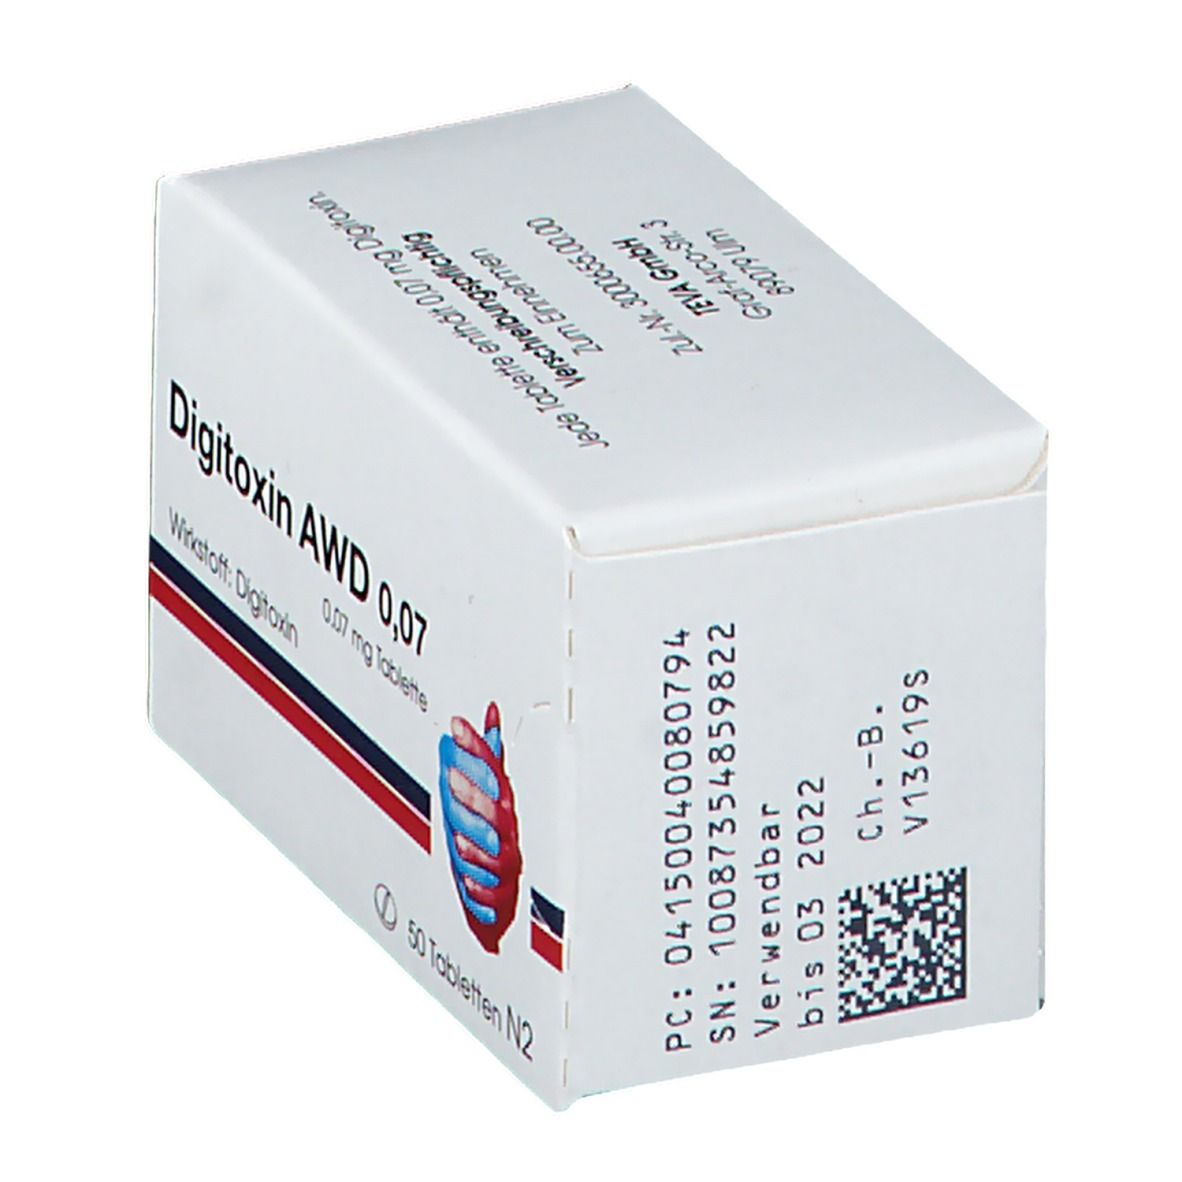 Digitoxin AWD 0,07 mg